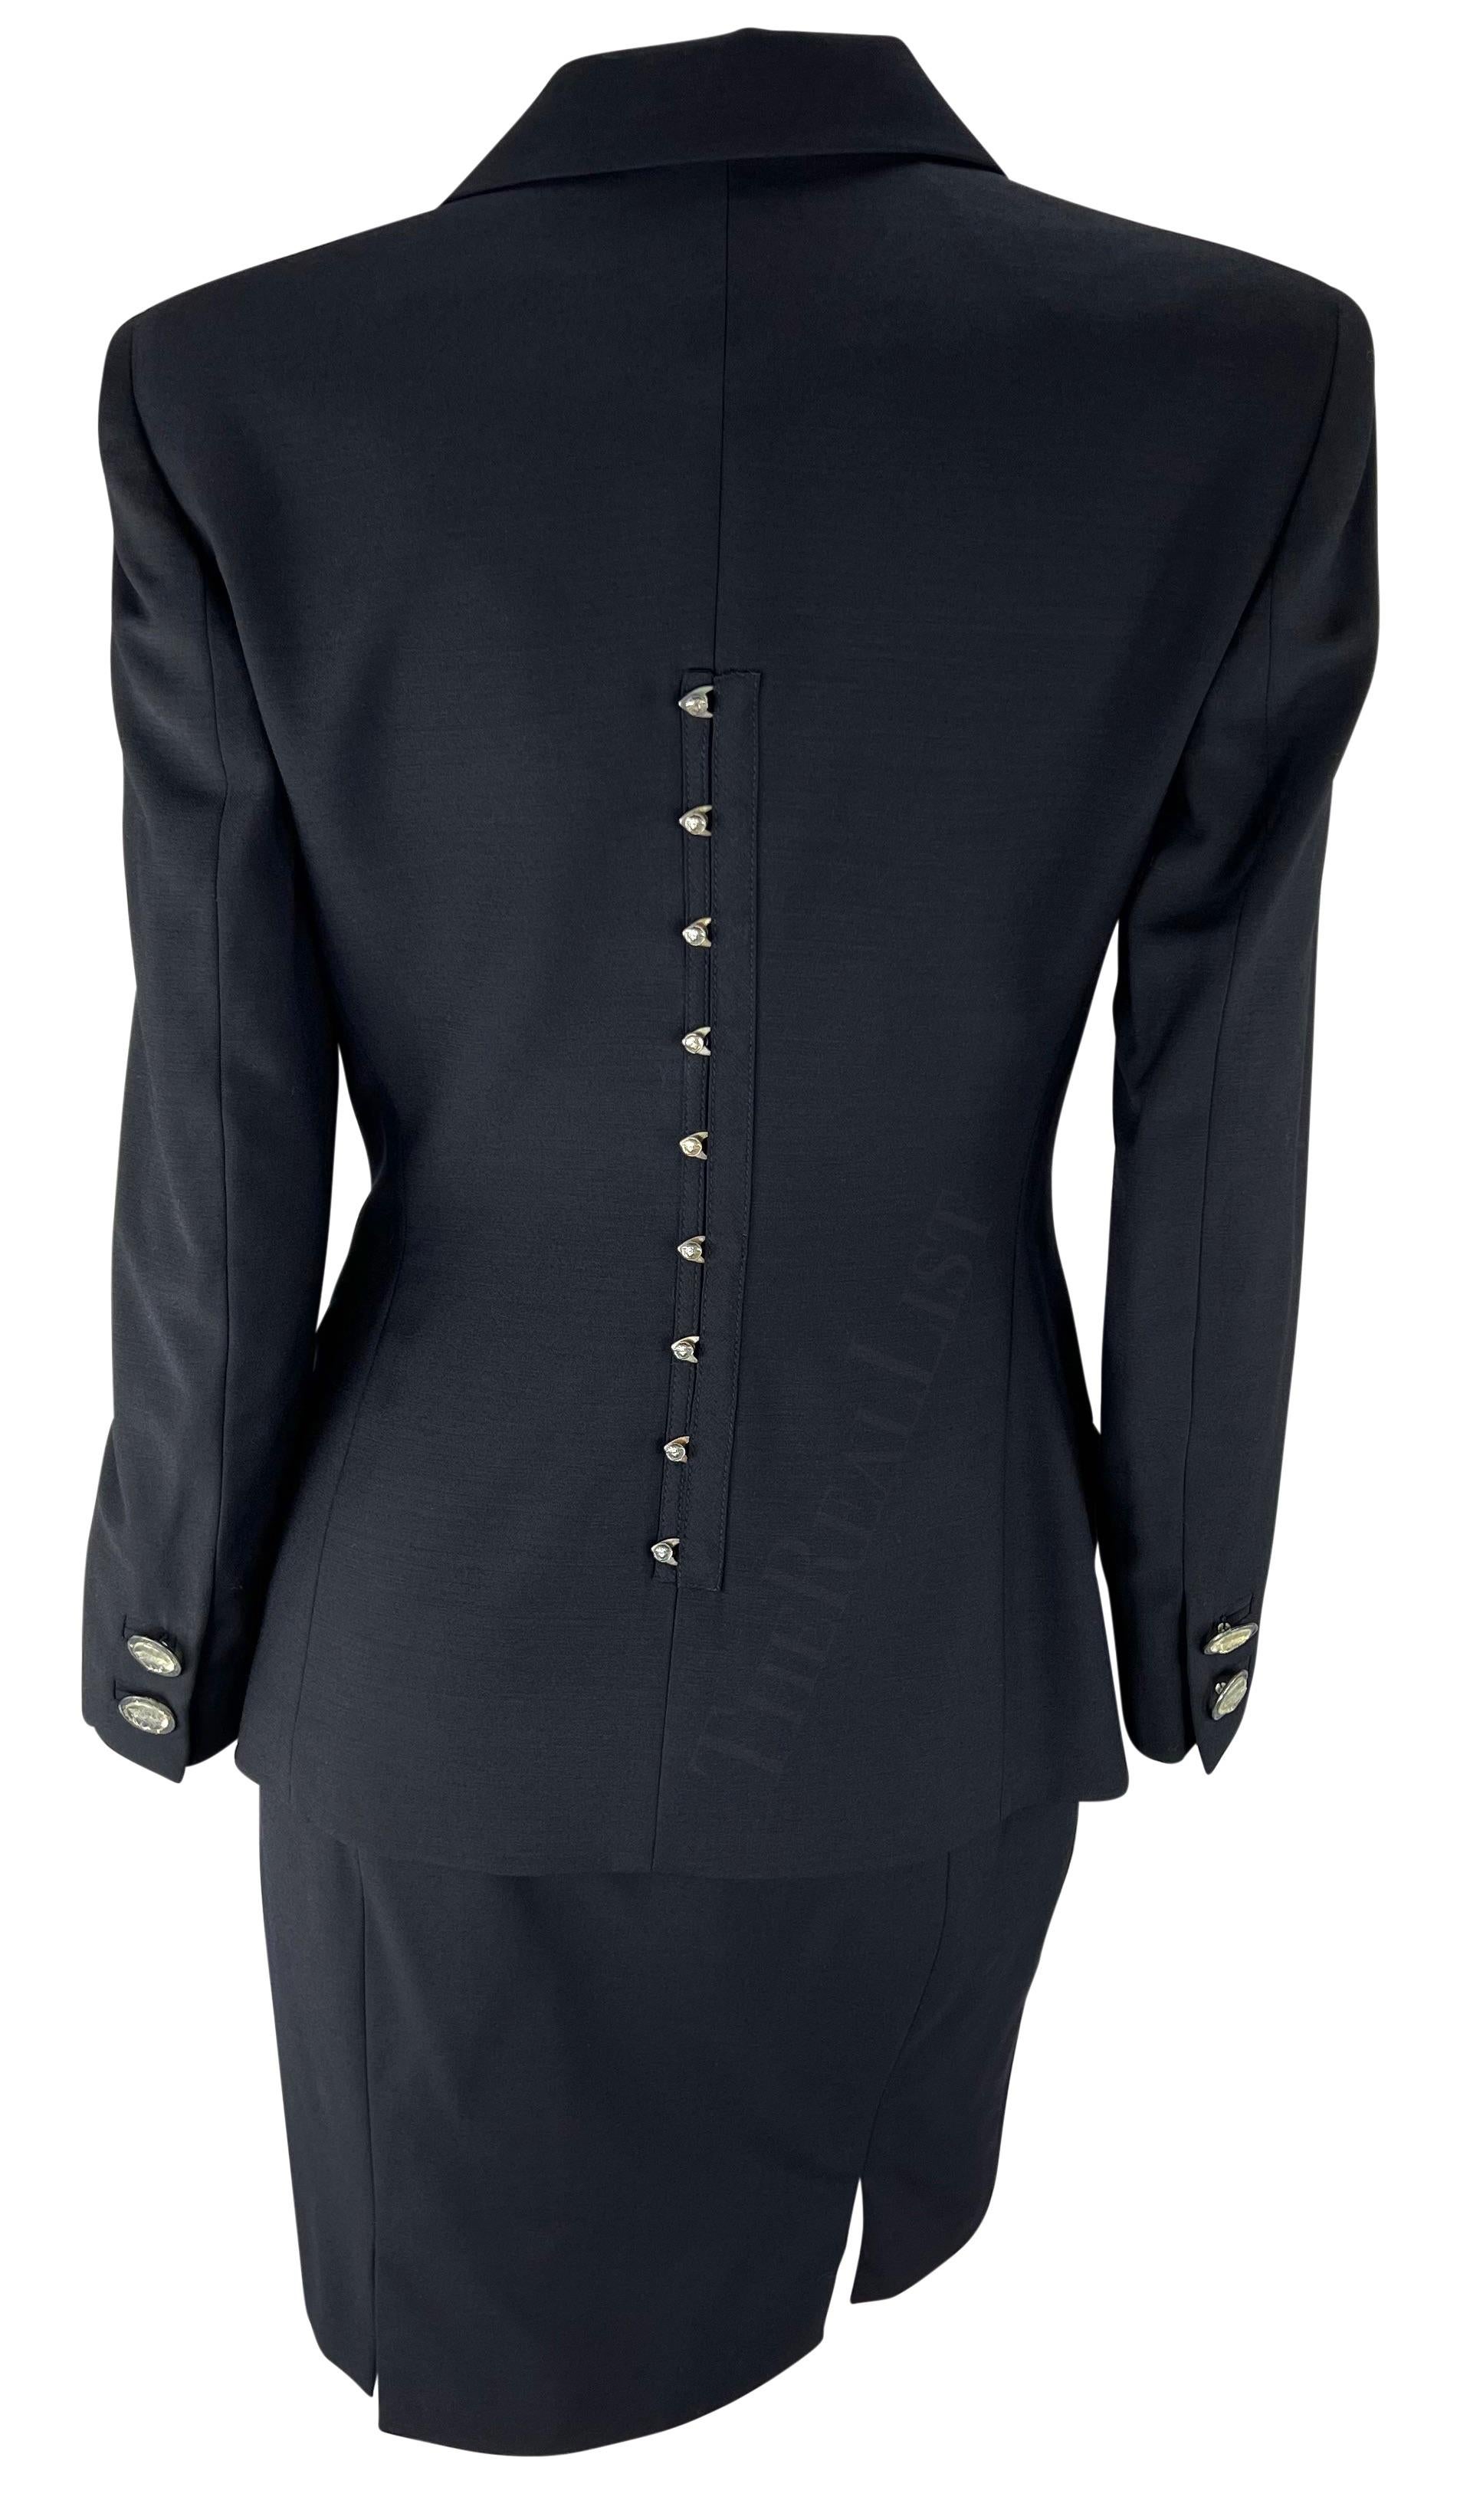 S/S 1995 Gianni Versace Couture Runway Corset Boned Medusa Black Skirt Suit For Sale 5